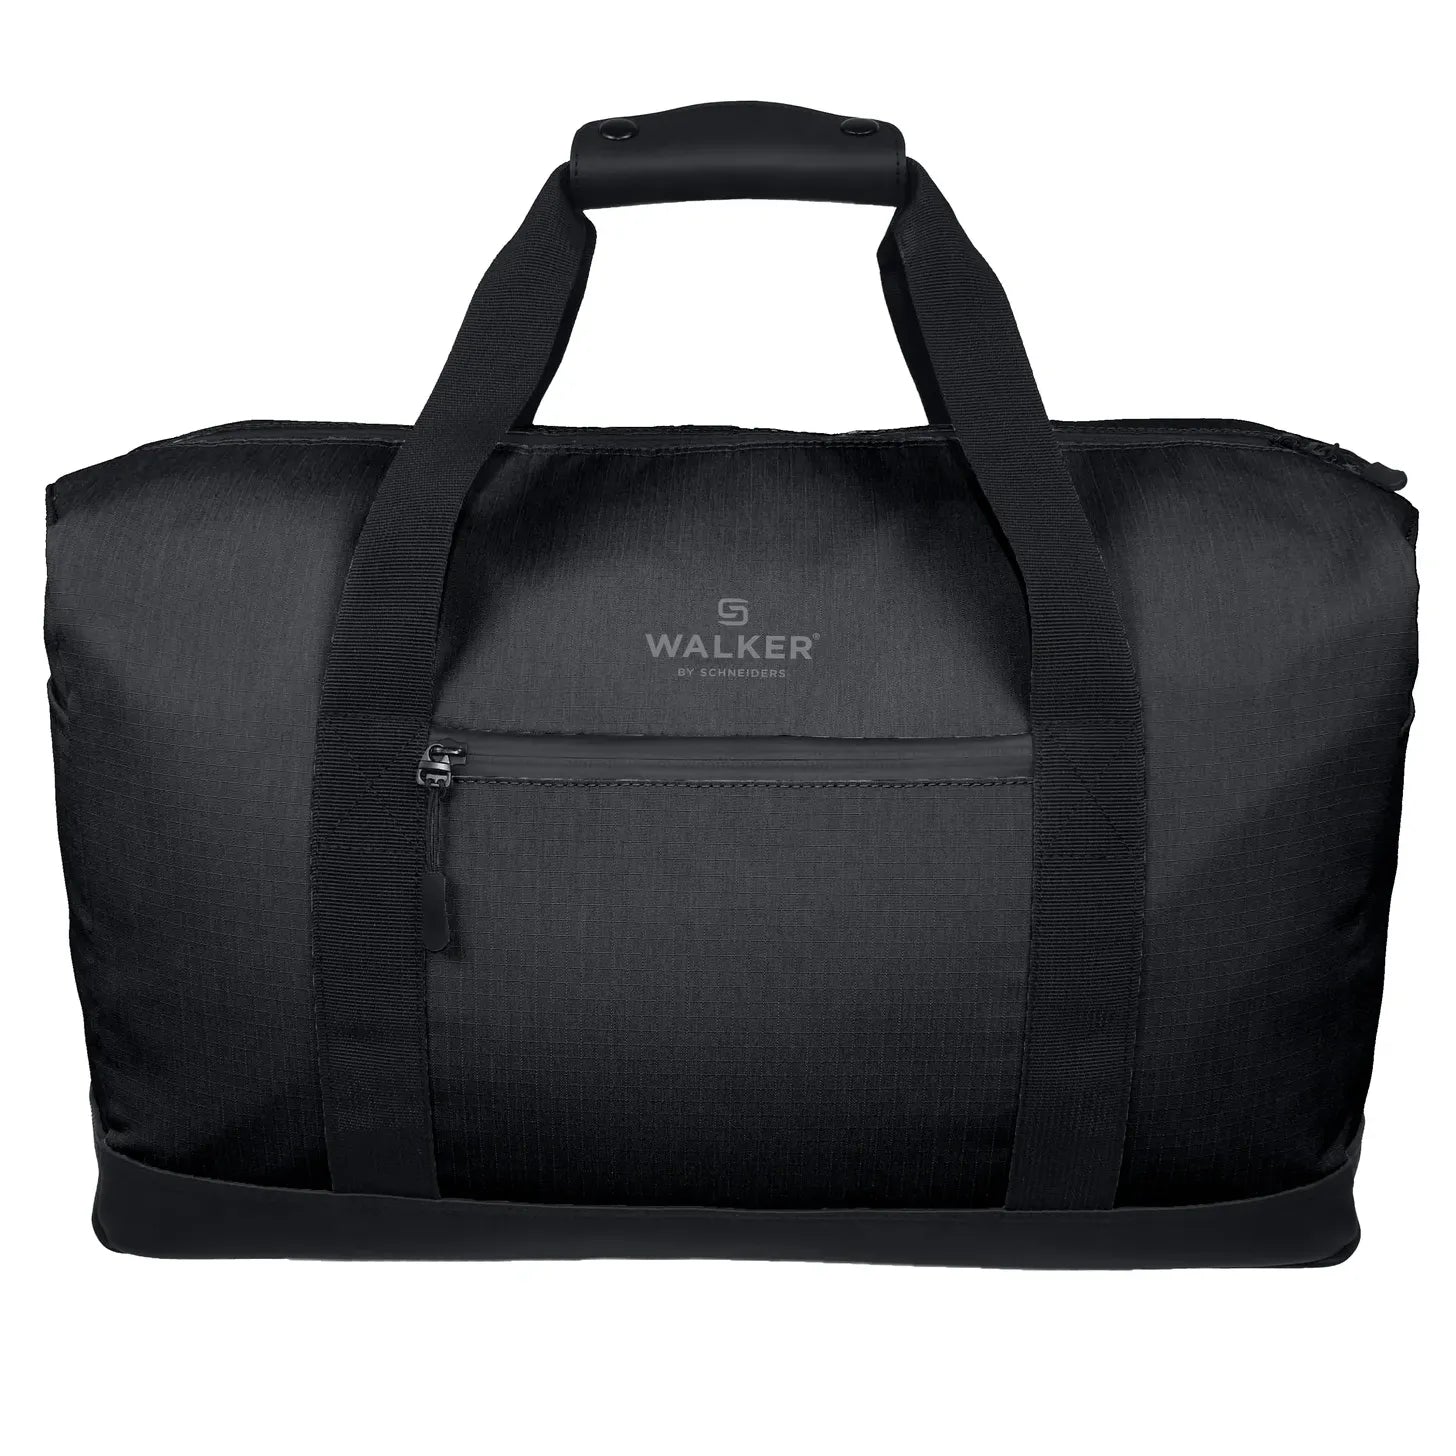 Walker Miami Weekender Travel Bag 48 cm - Anthracite